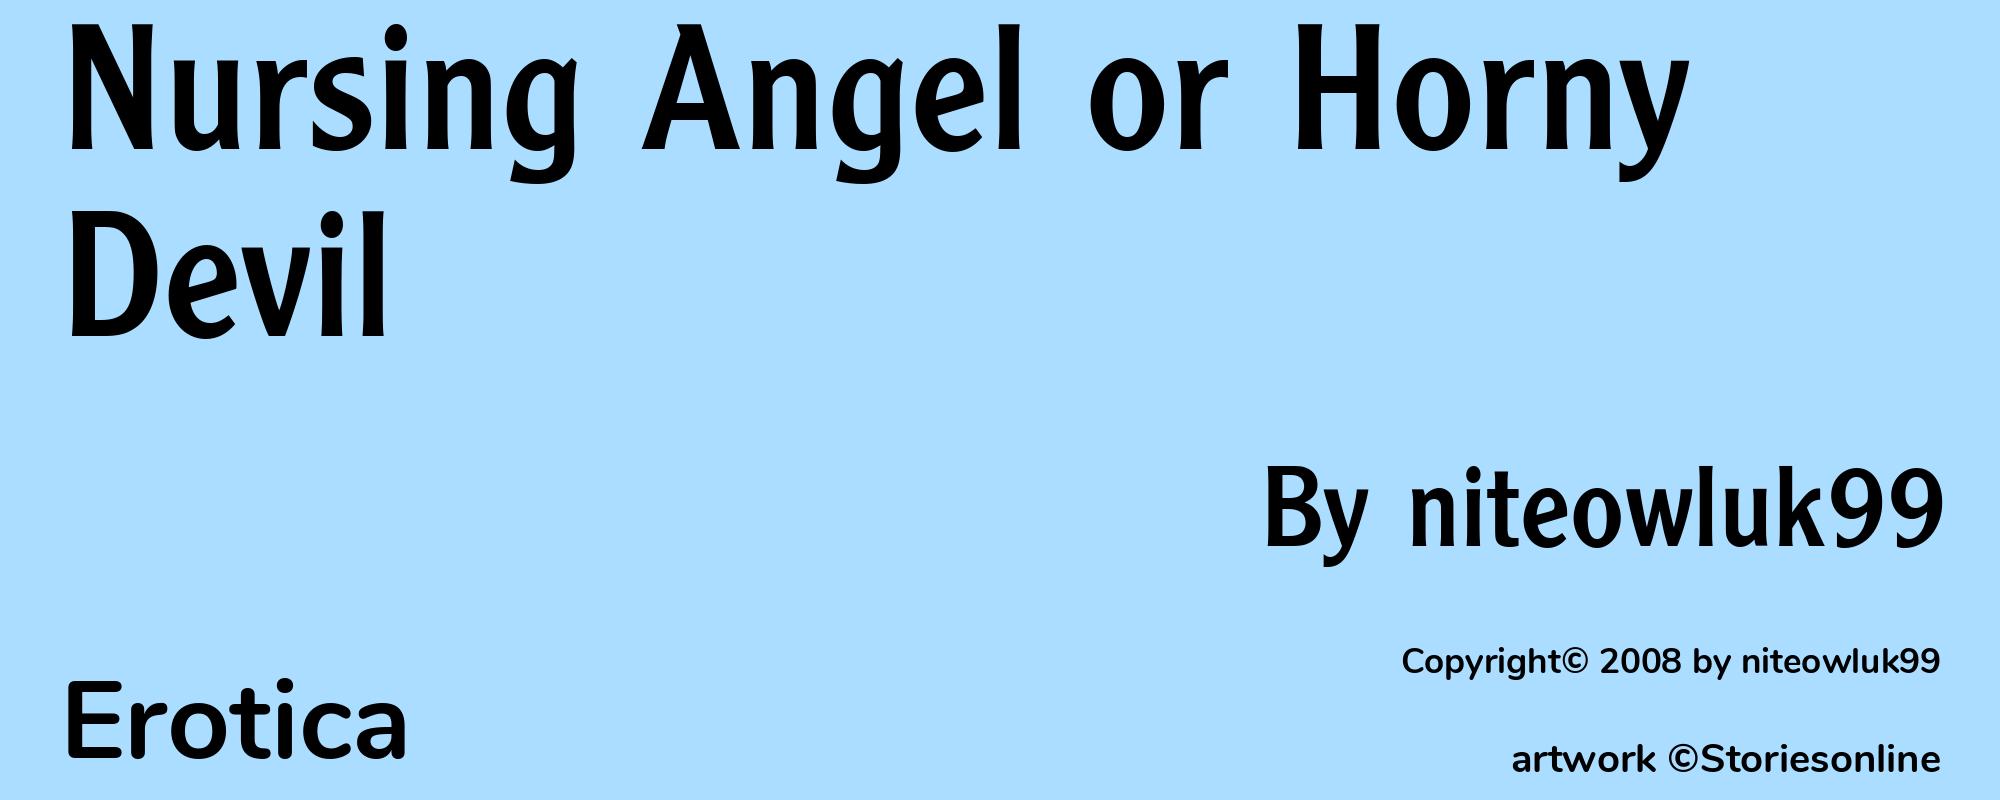 Nursing Angel or Horny Devil - Cover